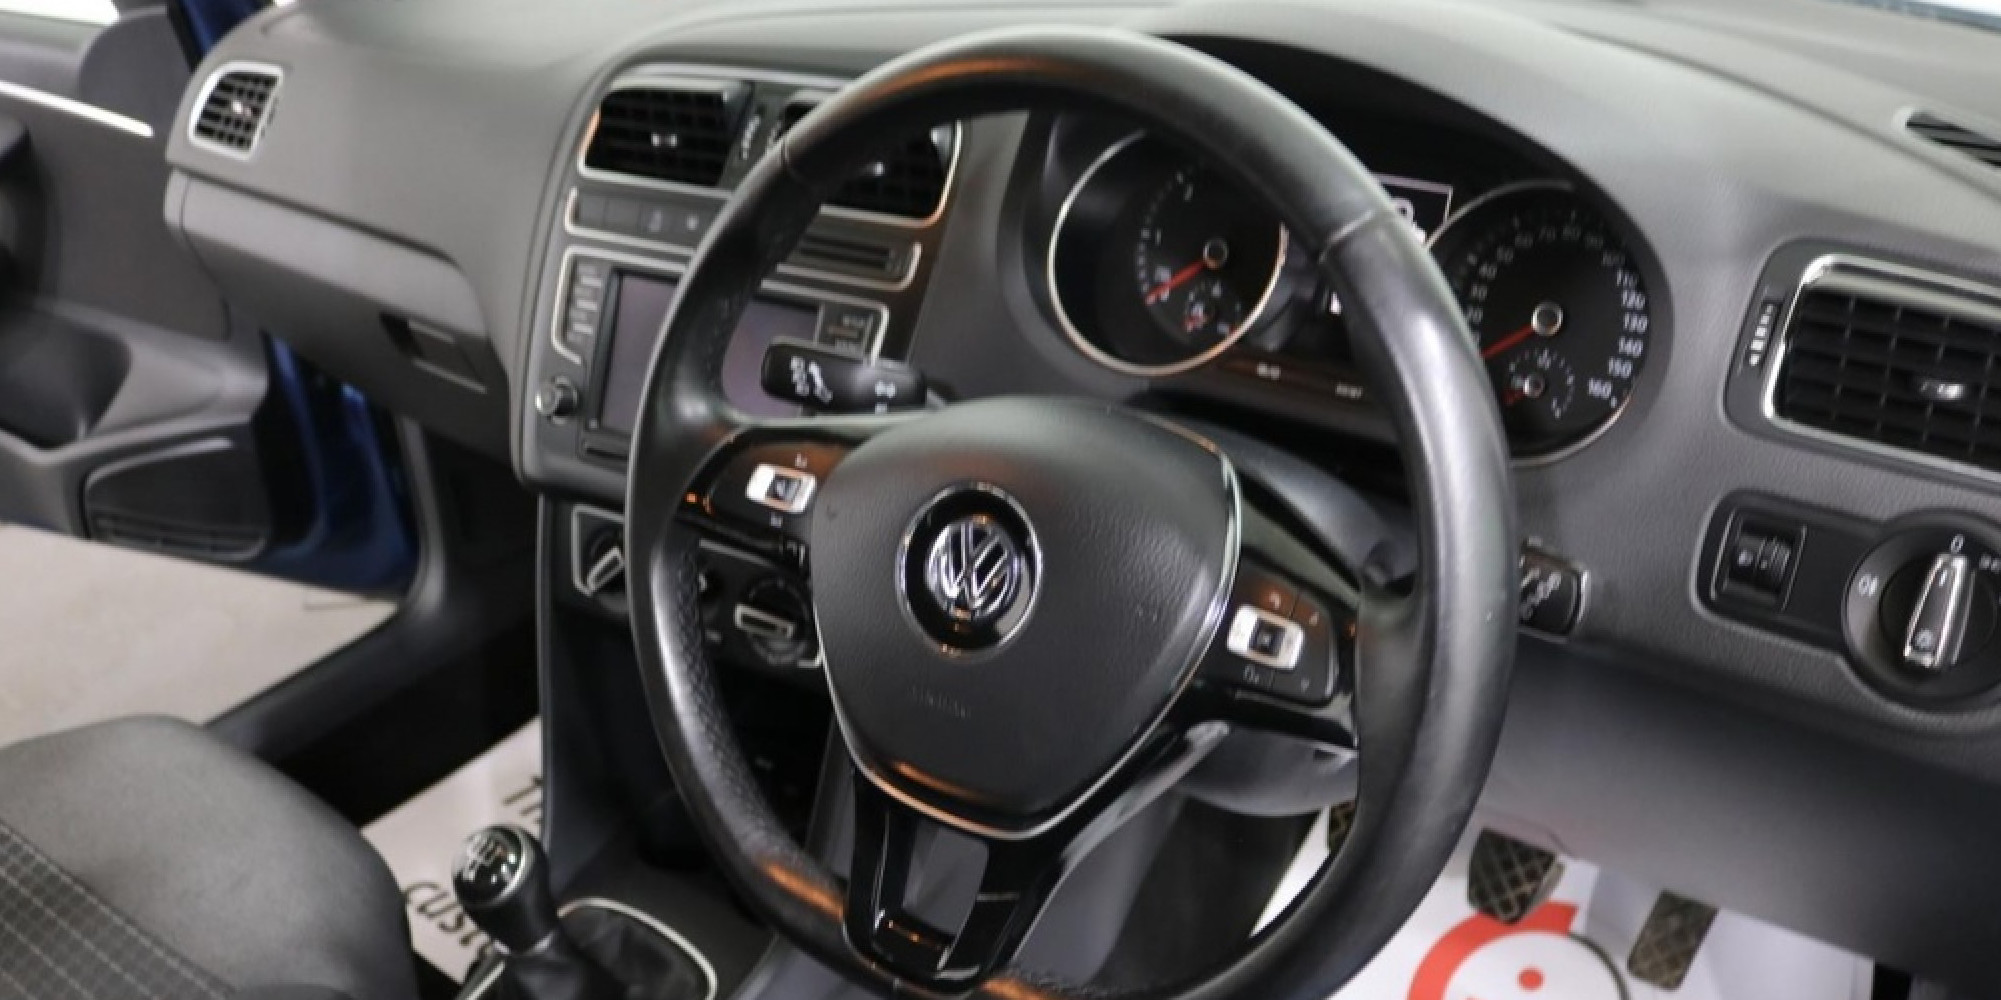 VW Polo front interior